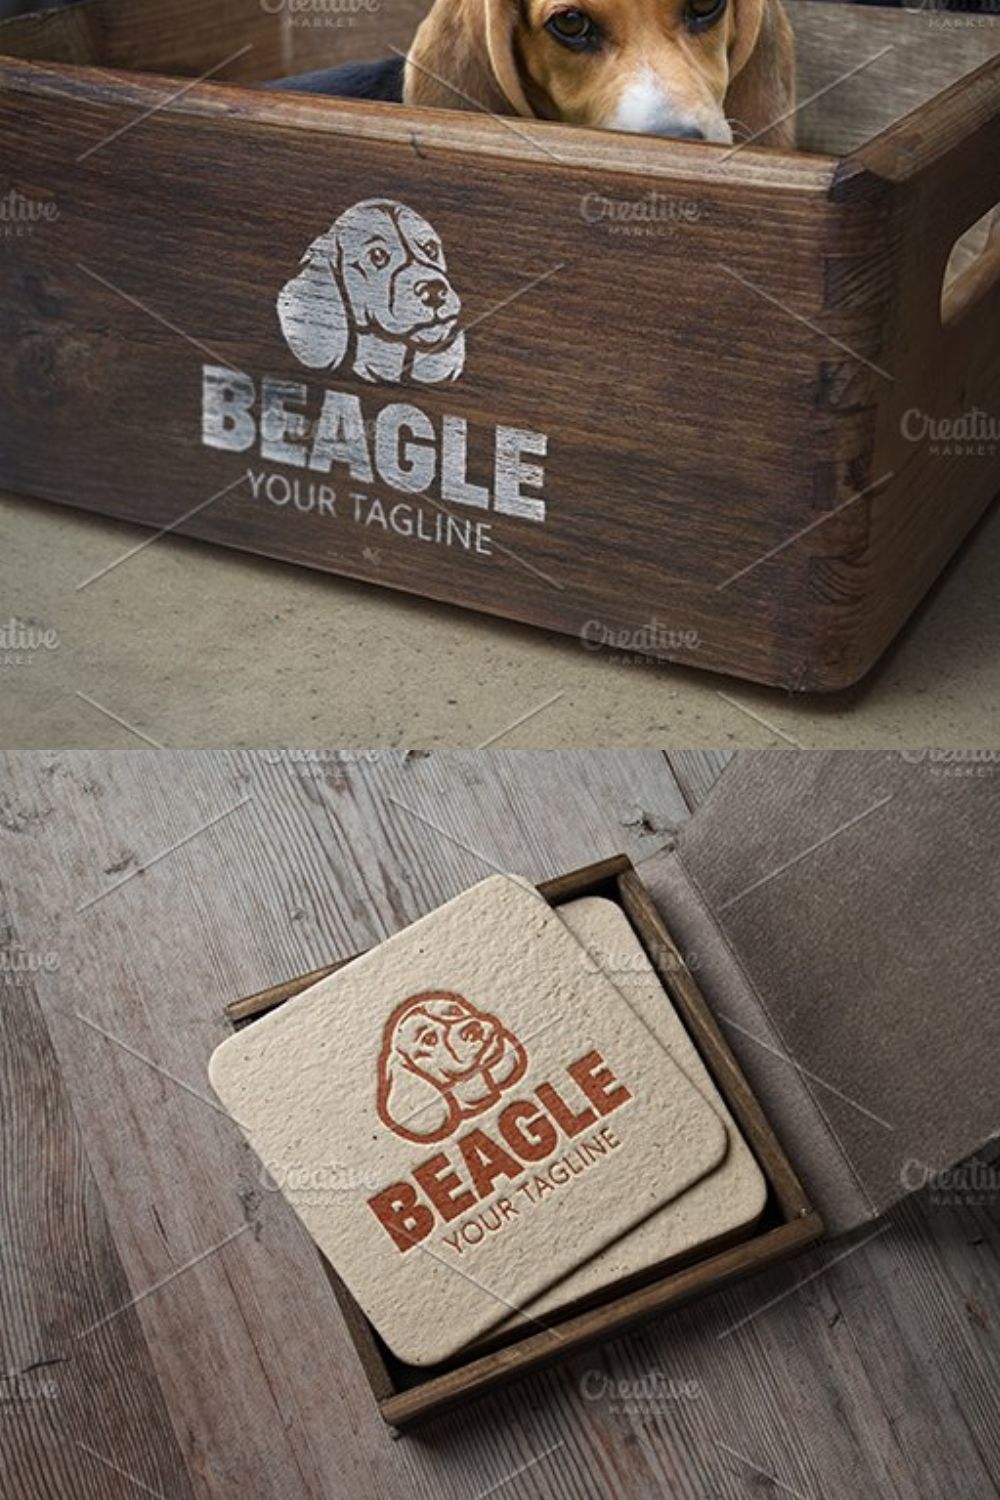 Beagle pinterest preview image.